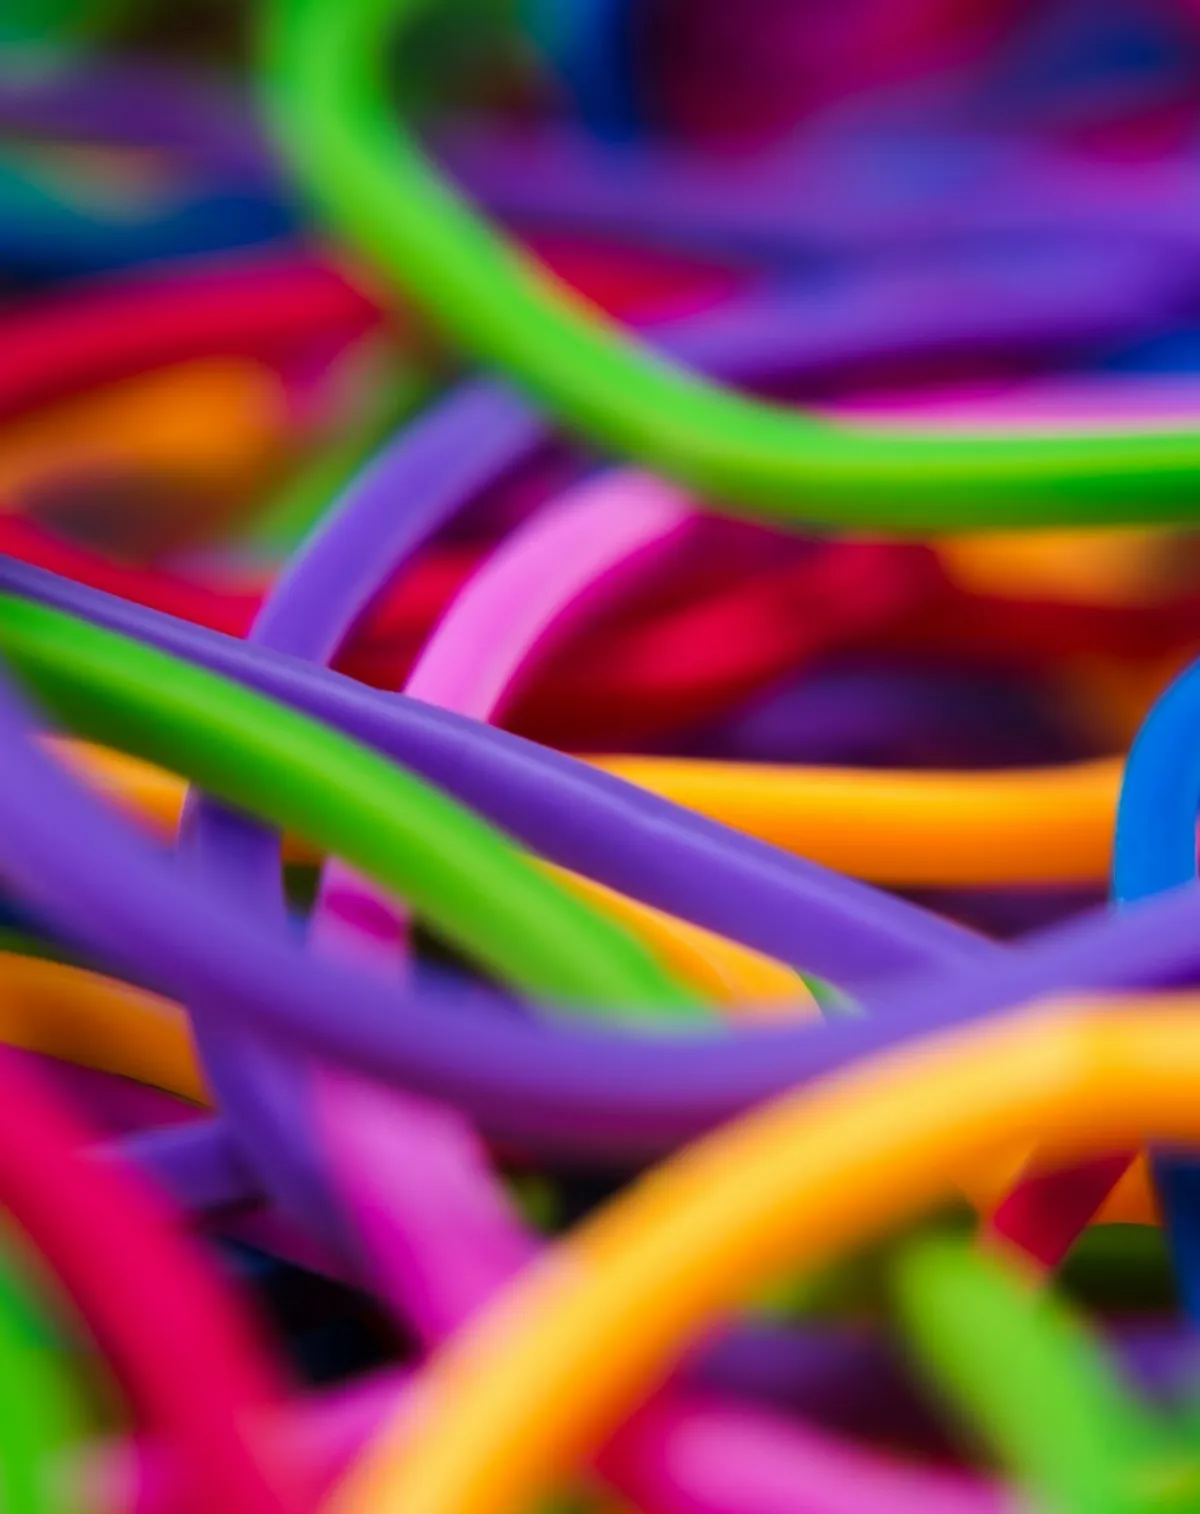 Multicoloured rubber bands